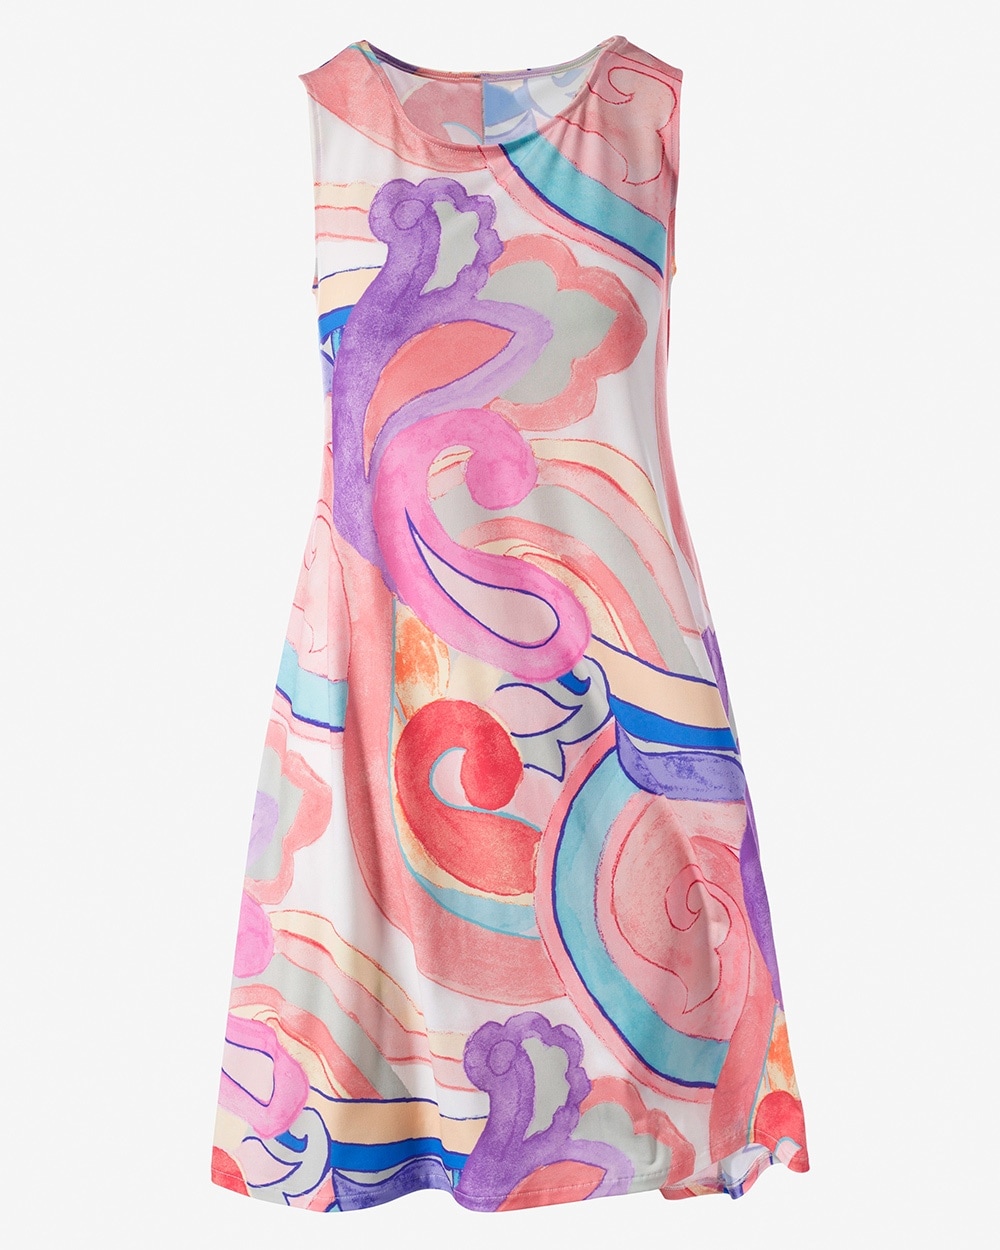 Painterly Movement Knee-Length Dress